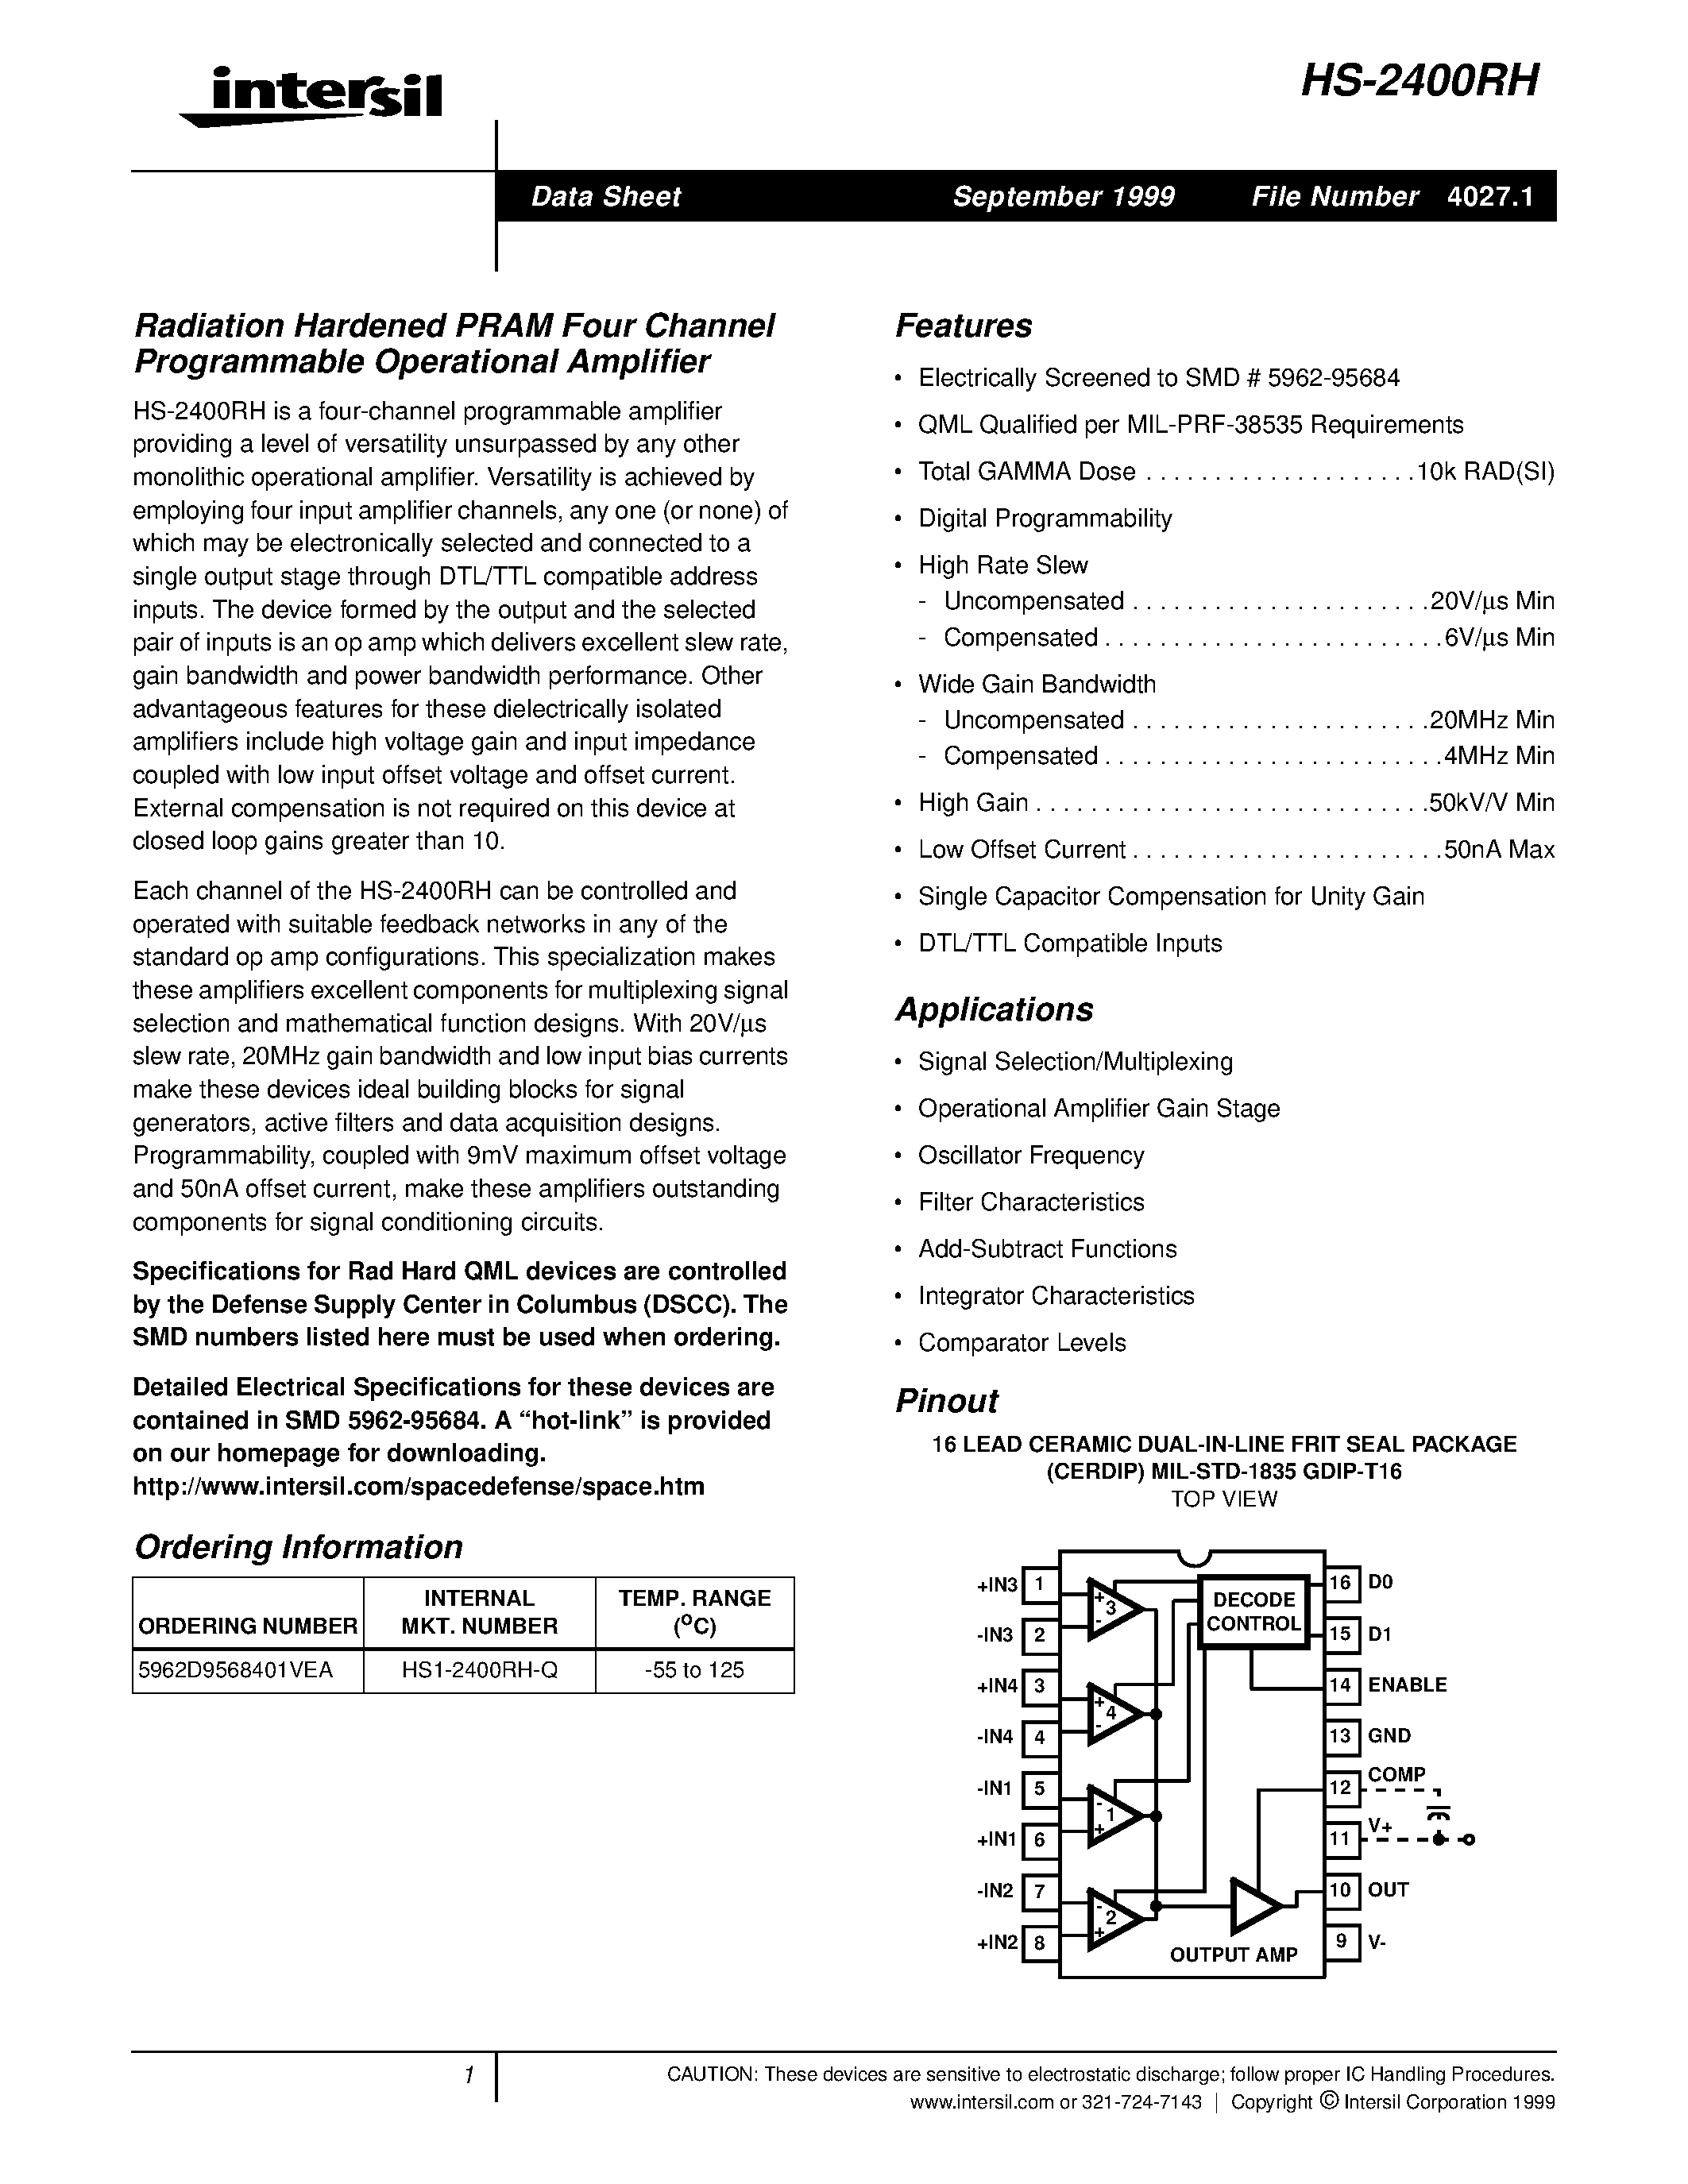 Даташит HS1-2400RH-Q-Radiation Hardened PRAM Four Channel Programmable Operational Amplifier страница 1